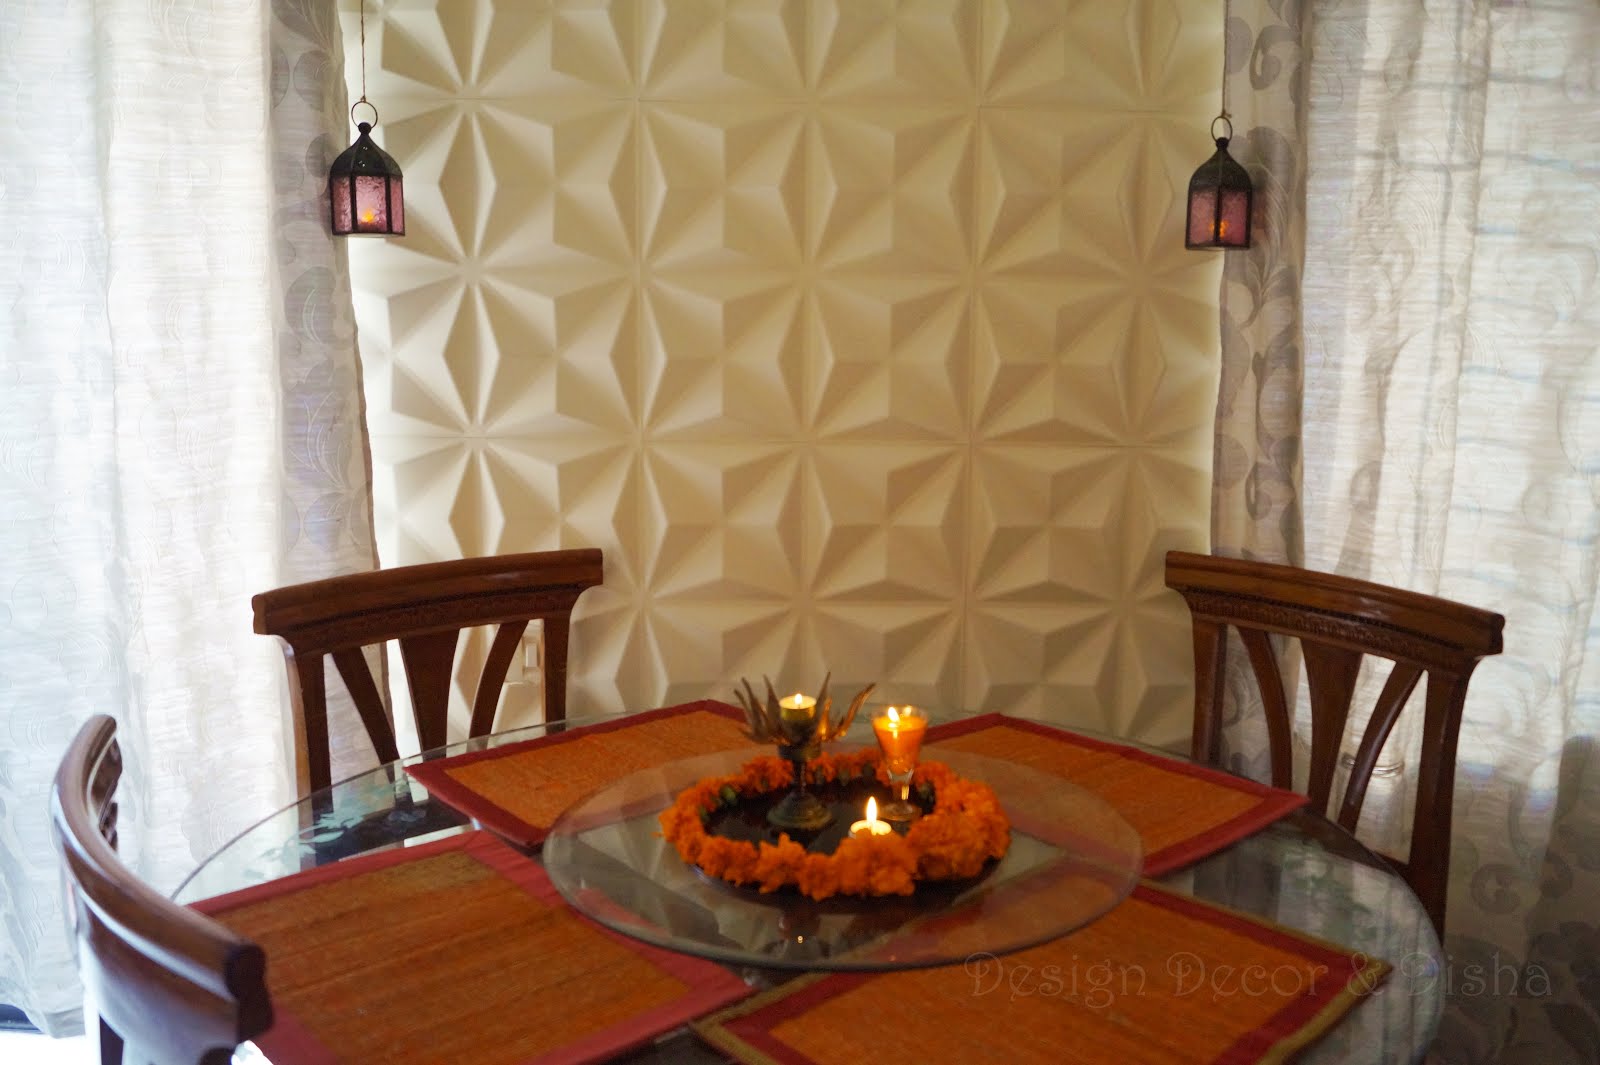 Design Decor & Disha | An Indian Design & Decor Blog: Dining Room